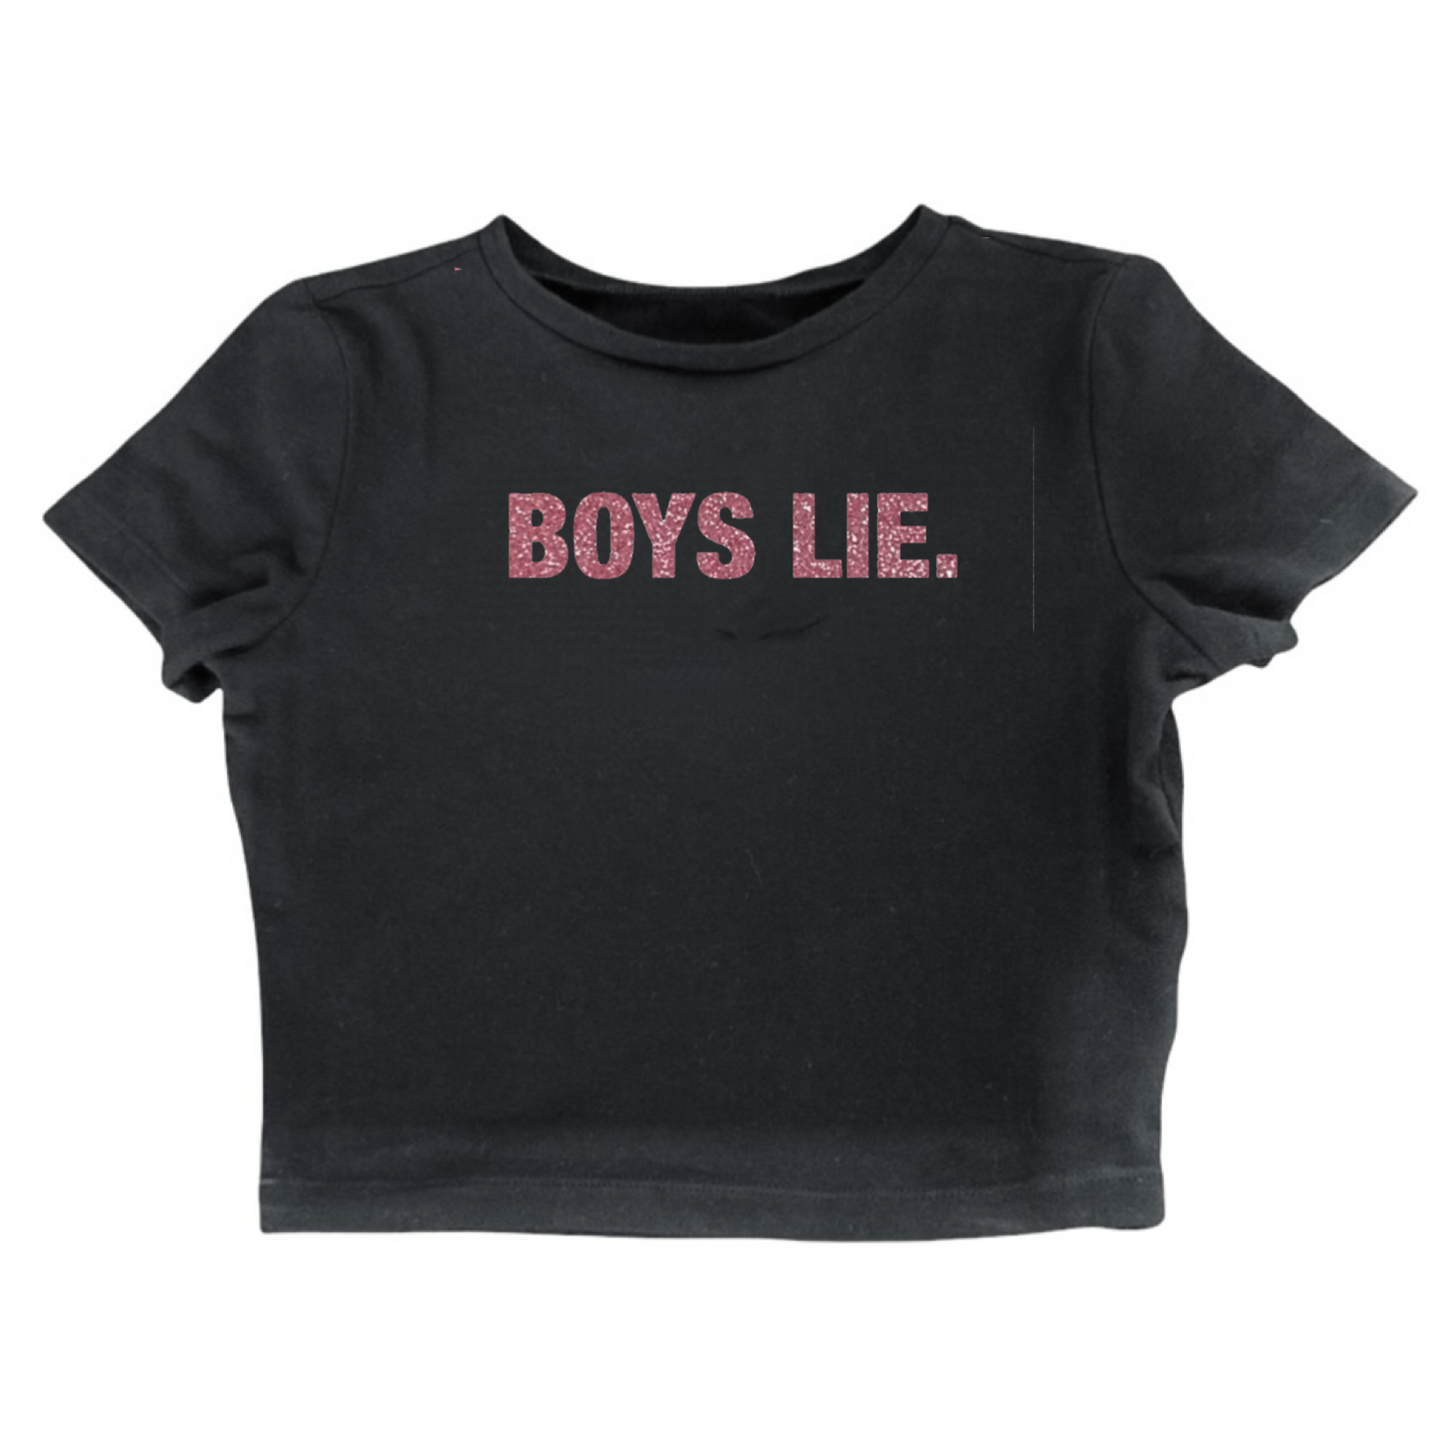 Boys Lie Black Baby Tee